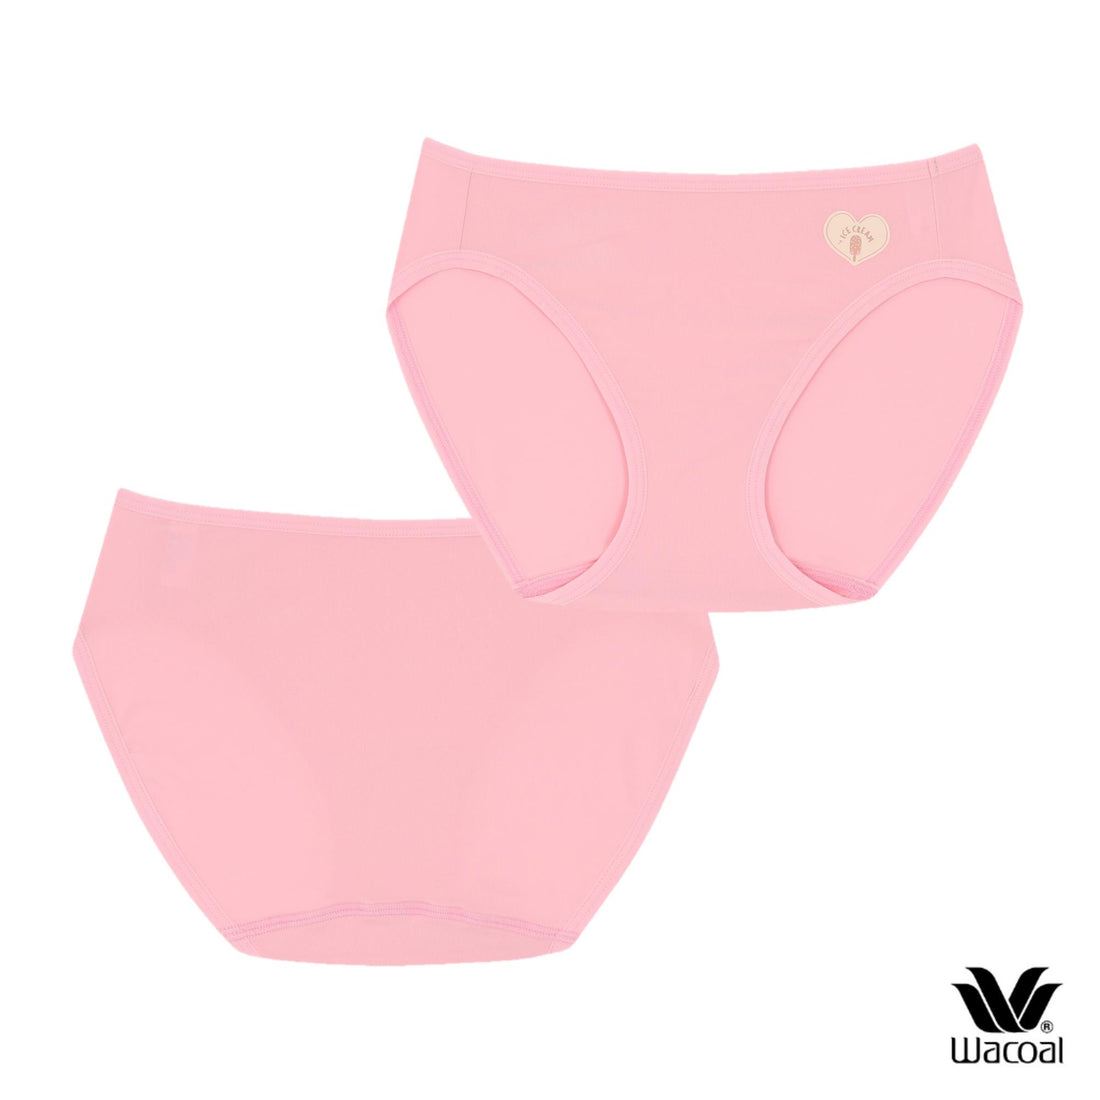 Wacoal Panty Fashion กางเกงในรูปแบบบิกินี 1 Set 3 ชิ้น รุ่น WU2C04 ( ซื้อ 1 Set แถม 1 Set)